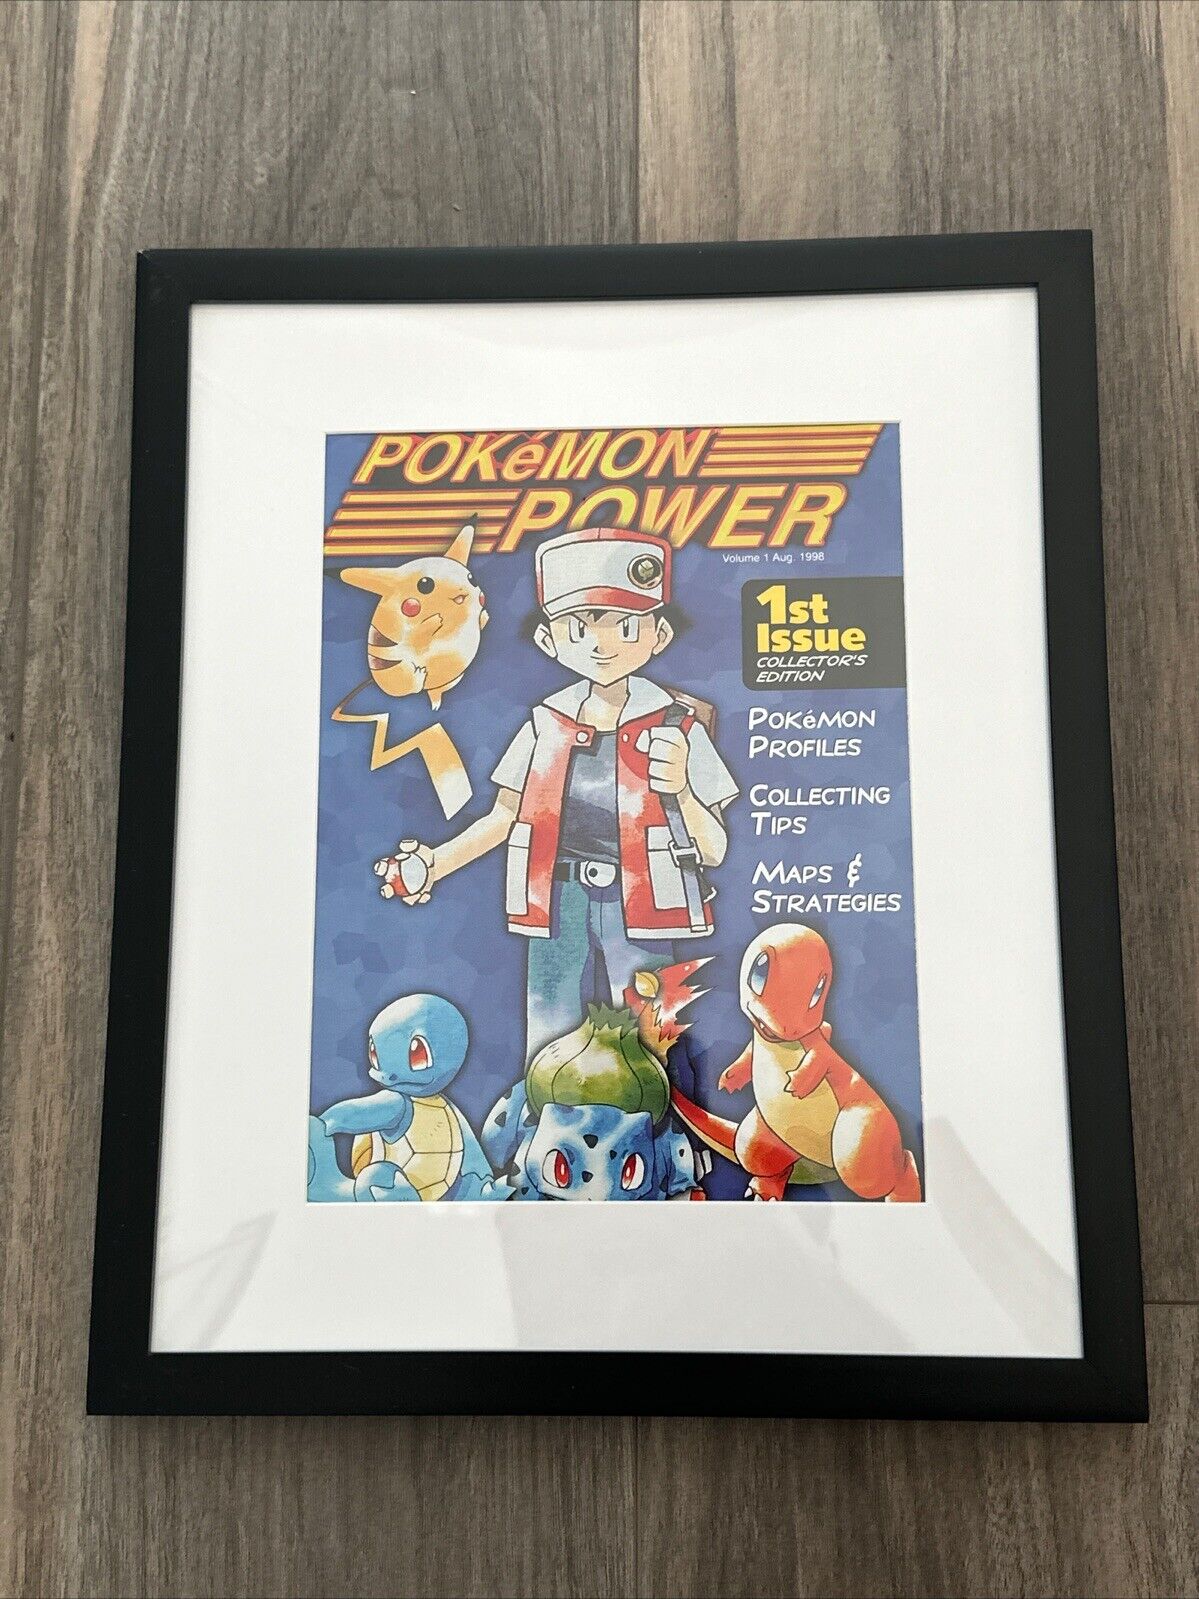 Pokémon Power Magazine 1st Issue Nintendo #1 Comic Book Collector Edition Framed